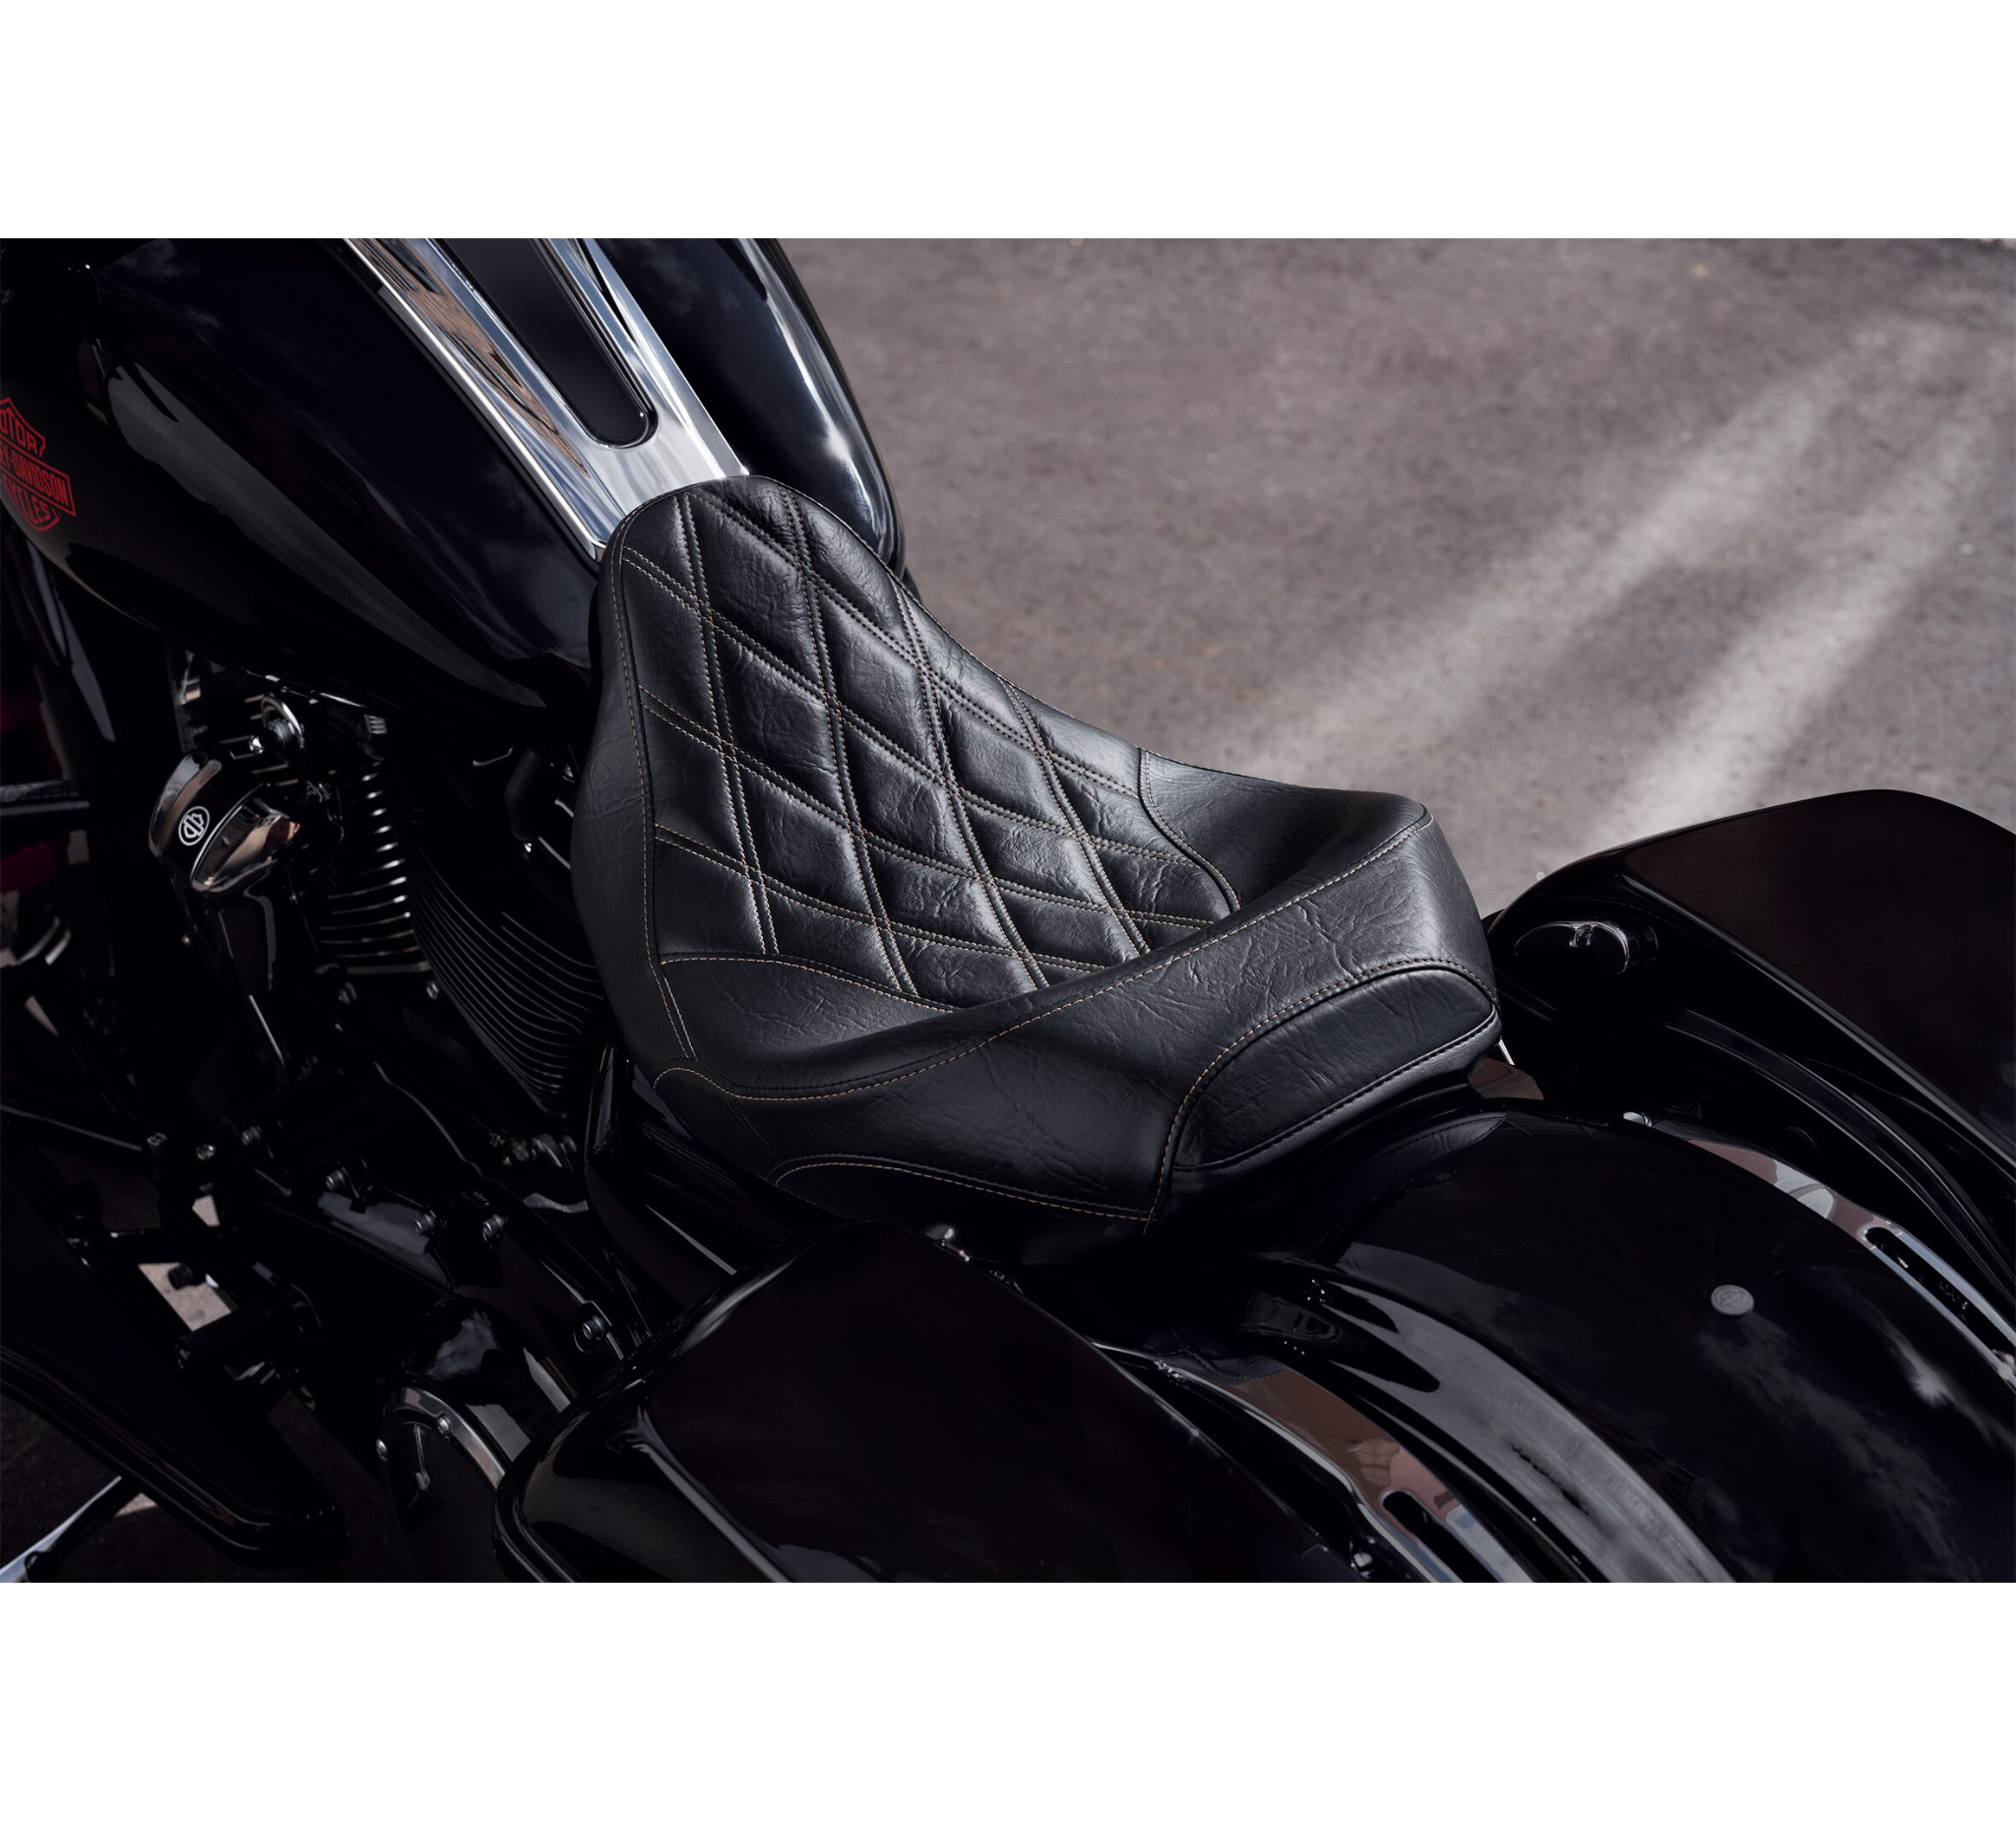 Low-Profile Solo Touring Seat 52000248 | Harley-Davidson USA